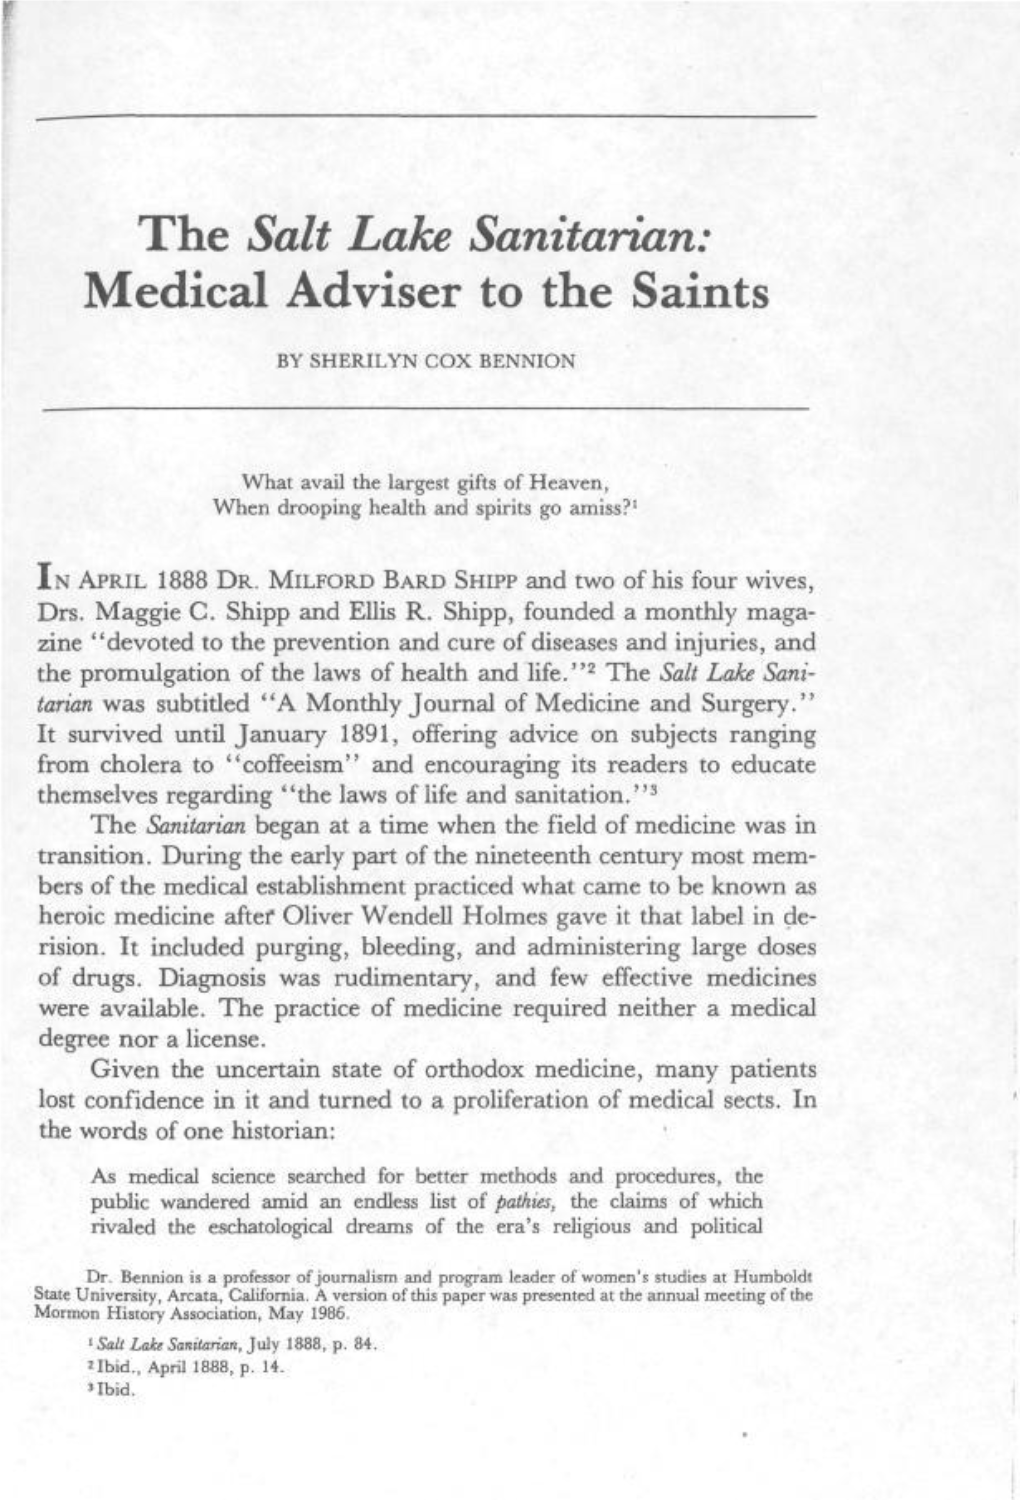 The Salt Lake Sanitarian: Medical Adviser to the Saints